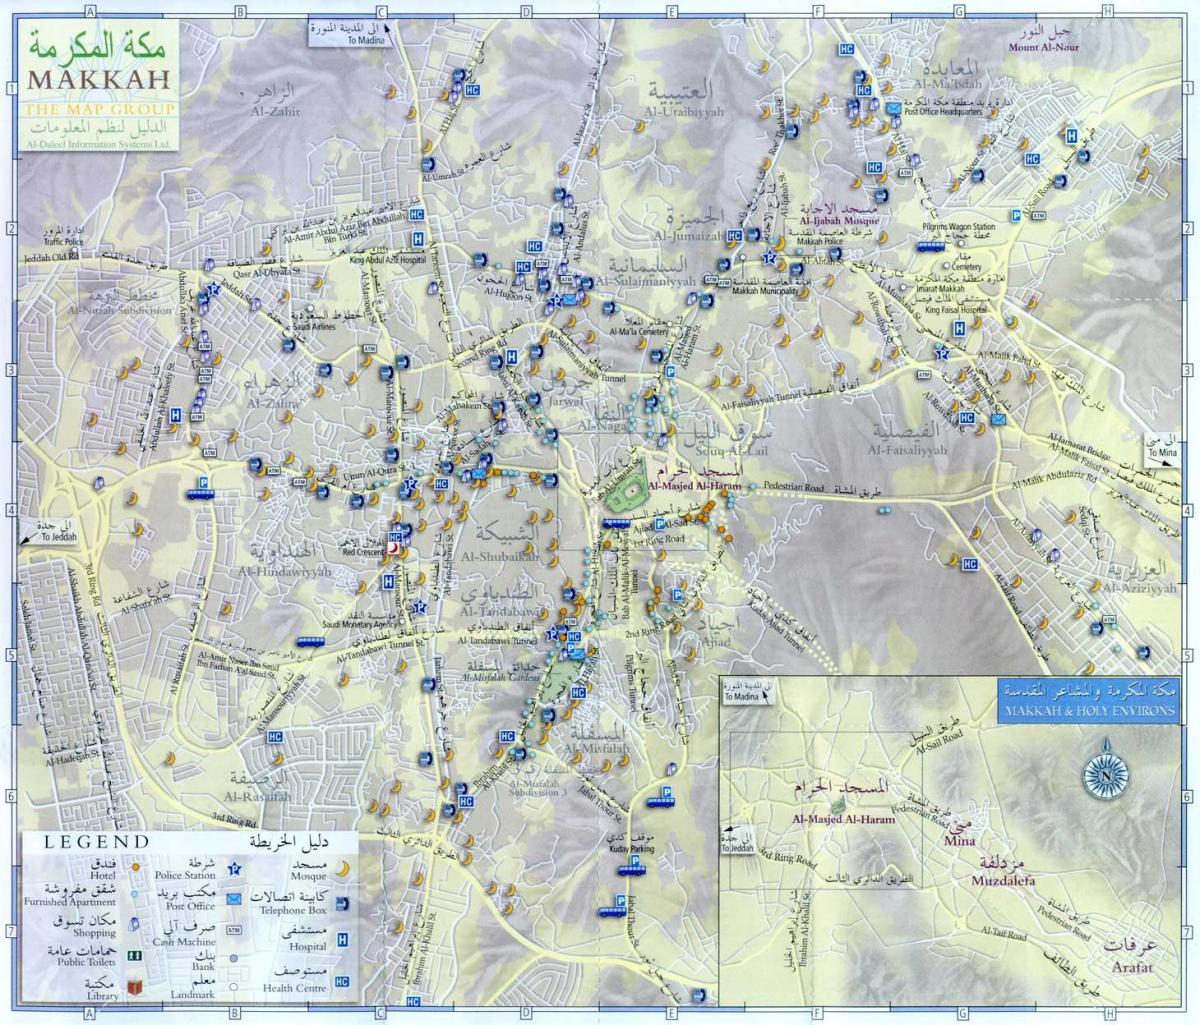 kart over Mekka rute